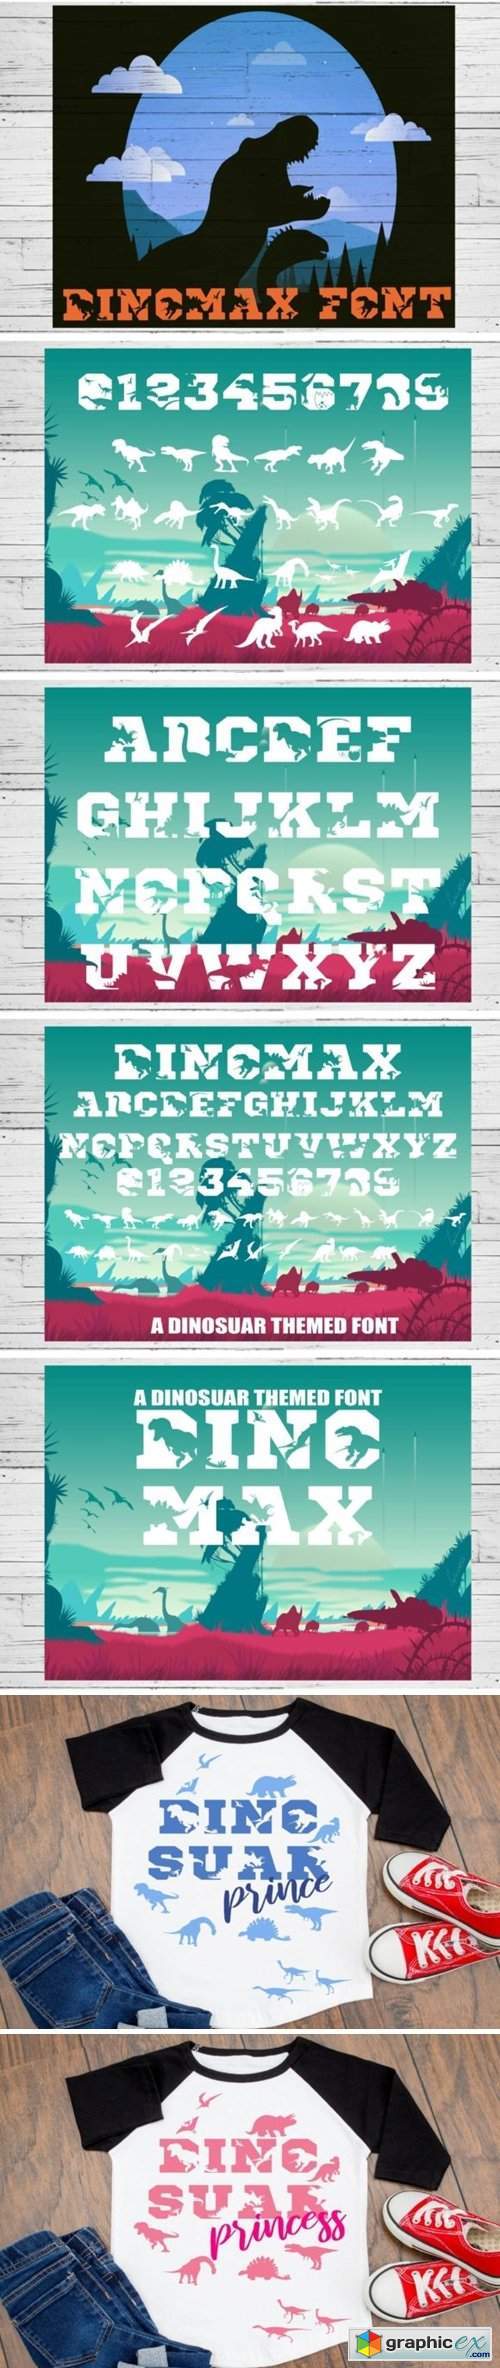 Dinomax Font